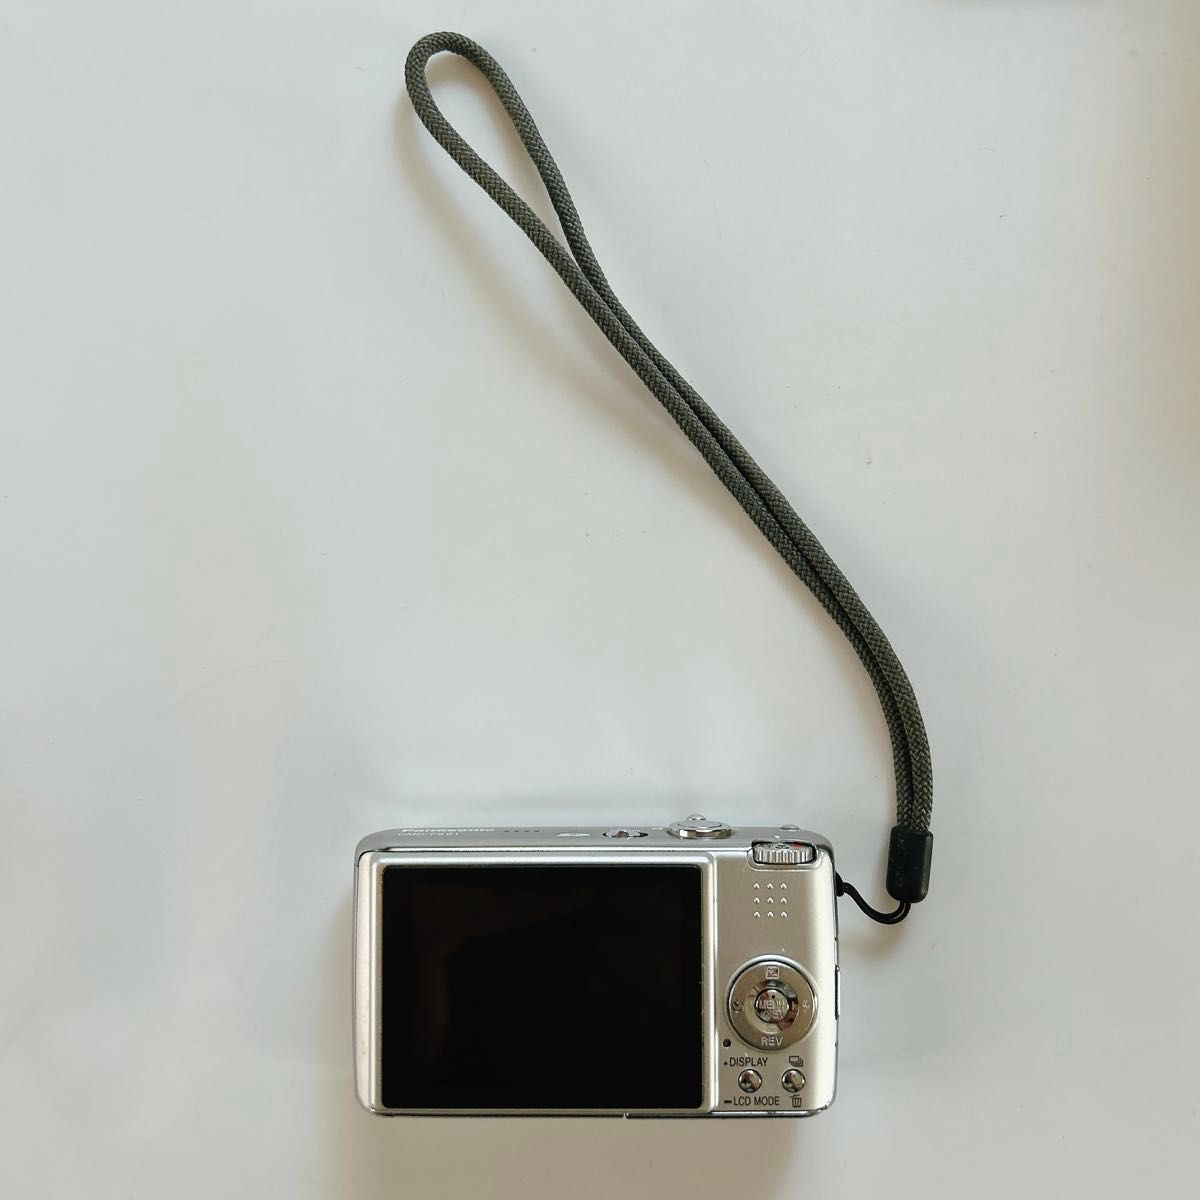 Panasonic LUMIX DMC-FX01-S パナソニック ルミックス シルバー コンパクトデジタルカメラ デジタルカメラ